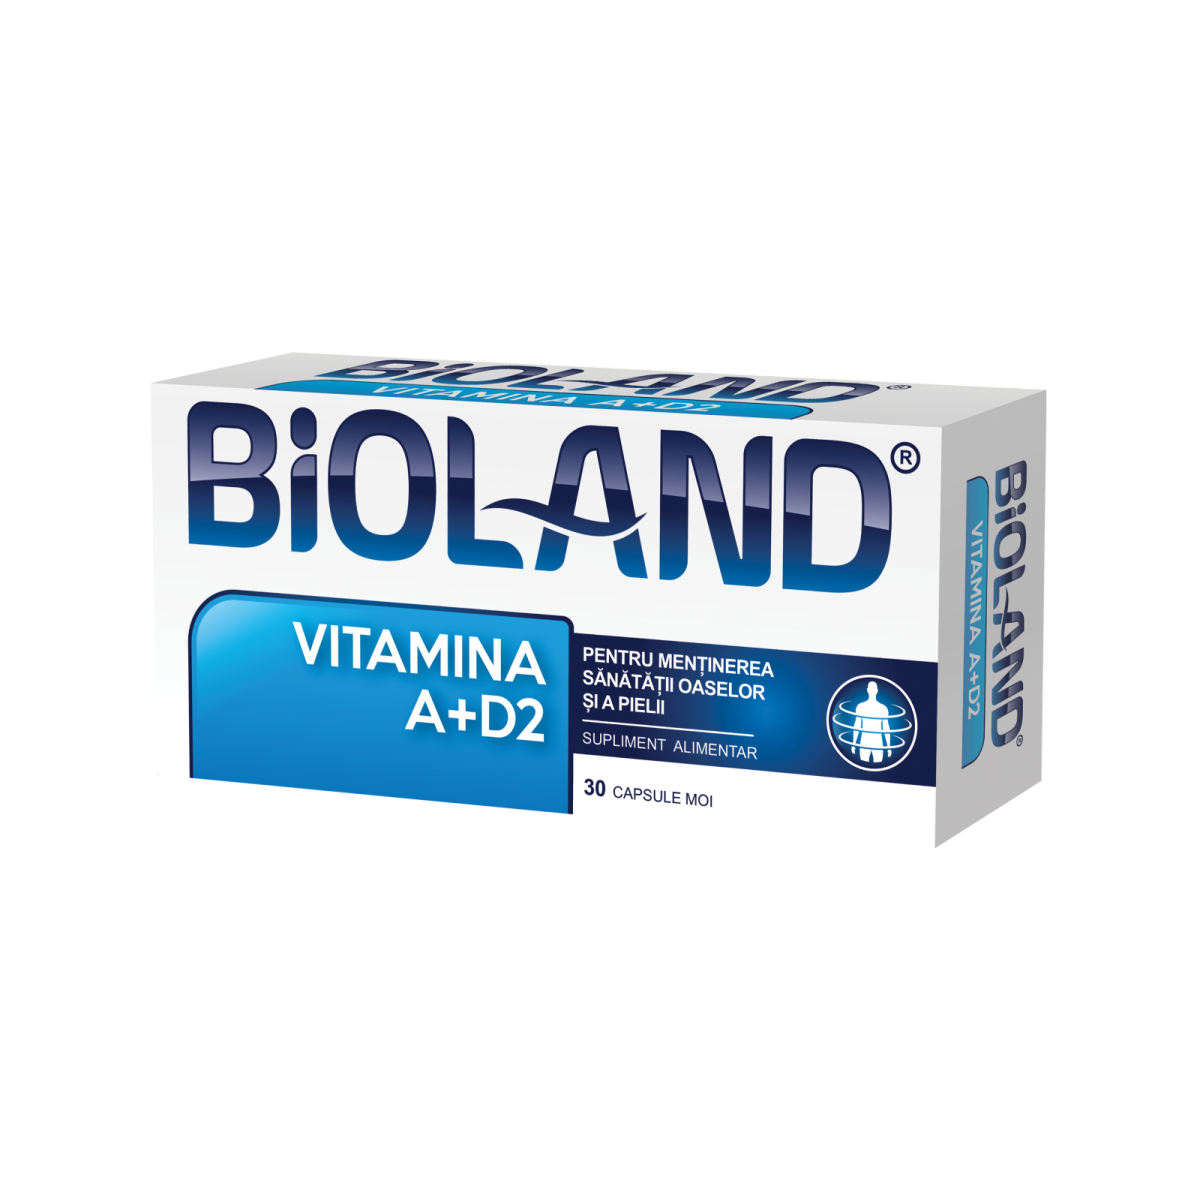 Vitamina A+D2 Bioland, 30 capsule, Biofarm